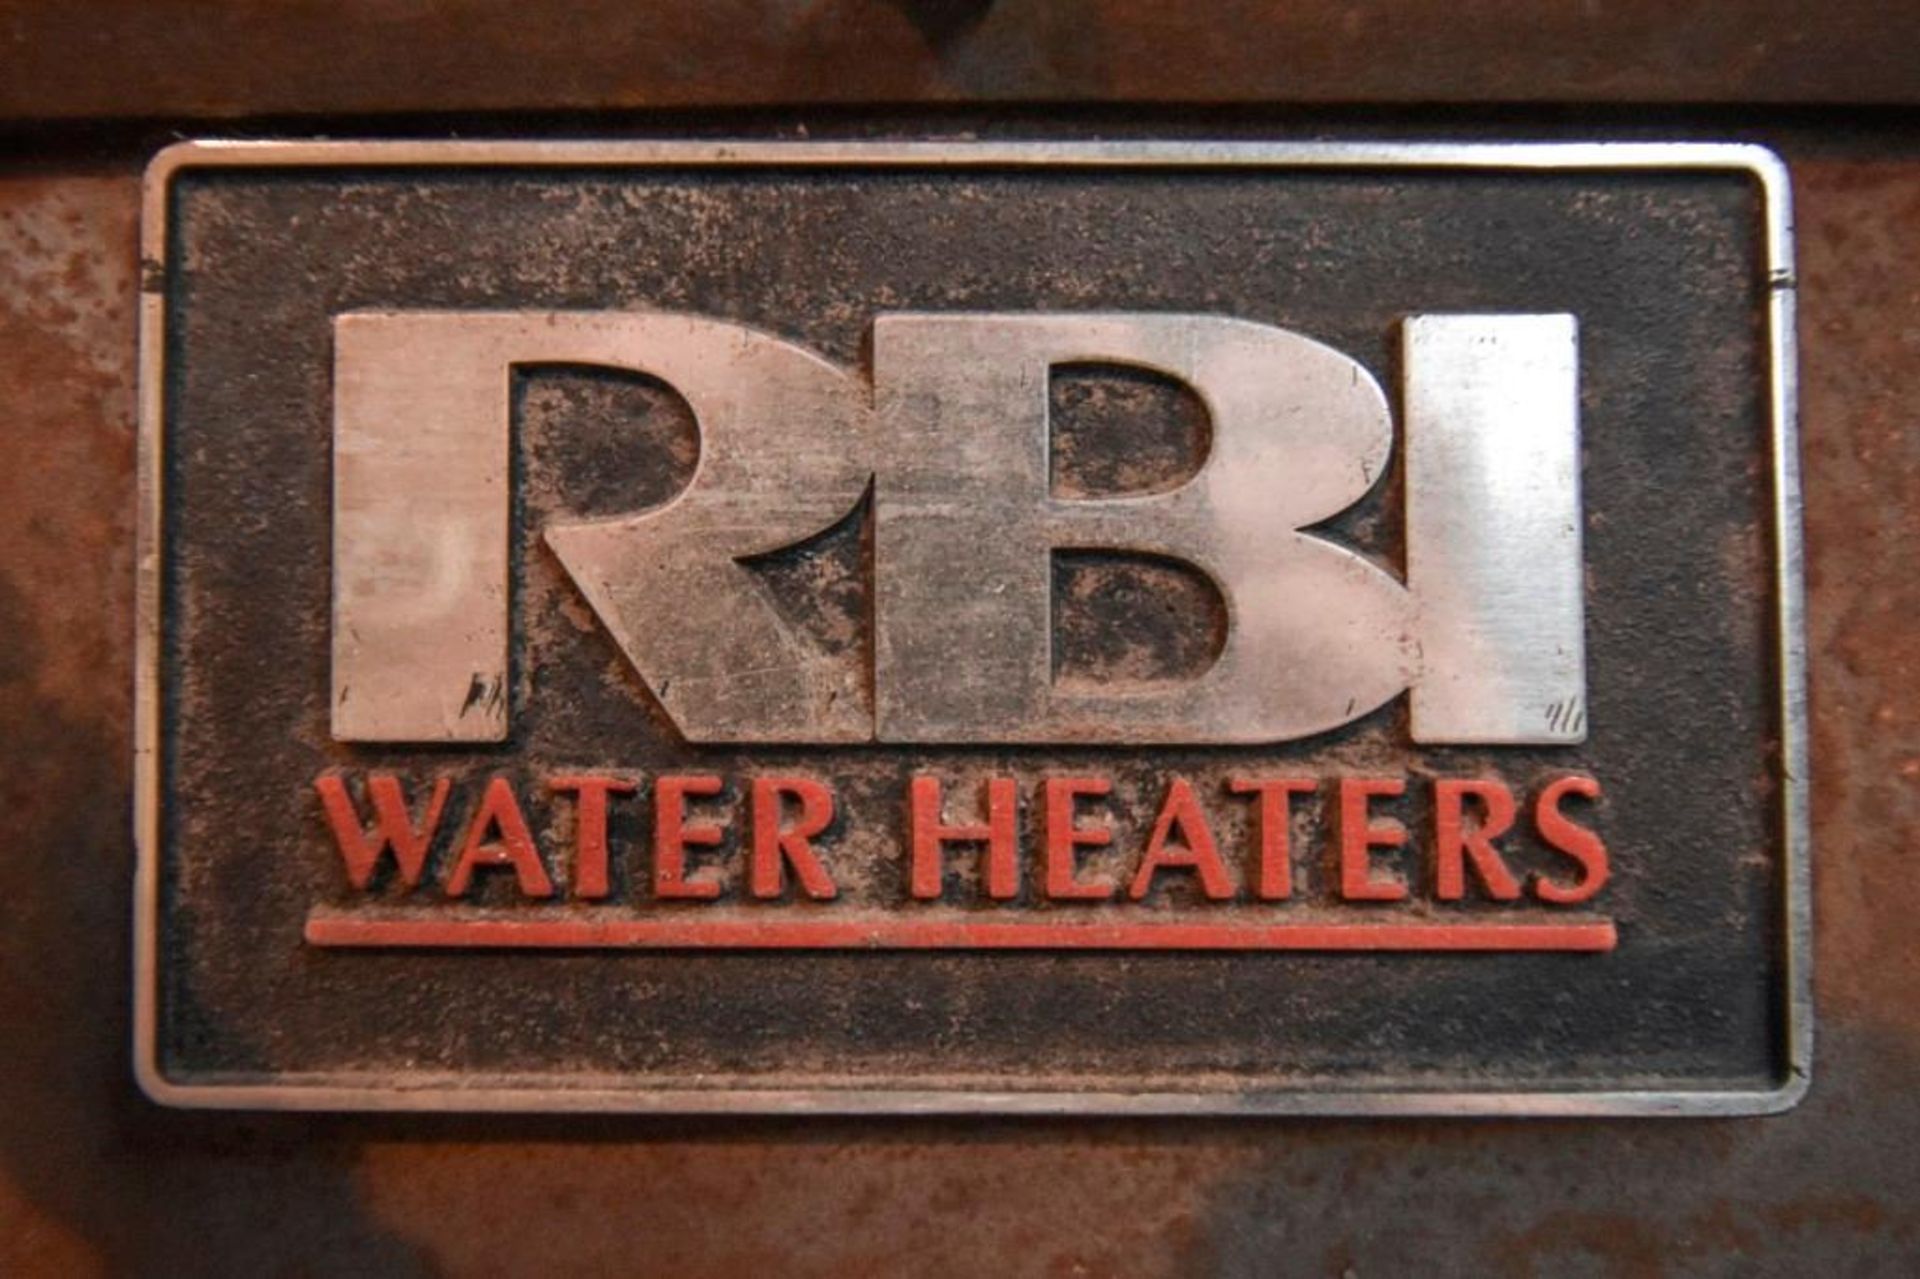 RBI Boiler - Image 5 of 6